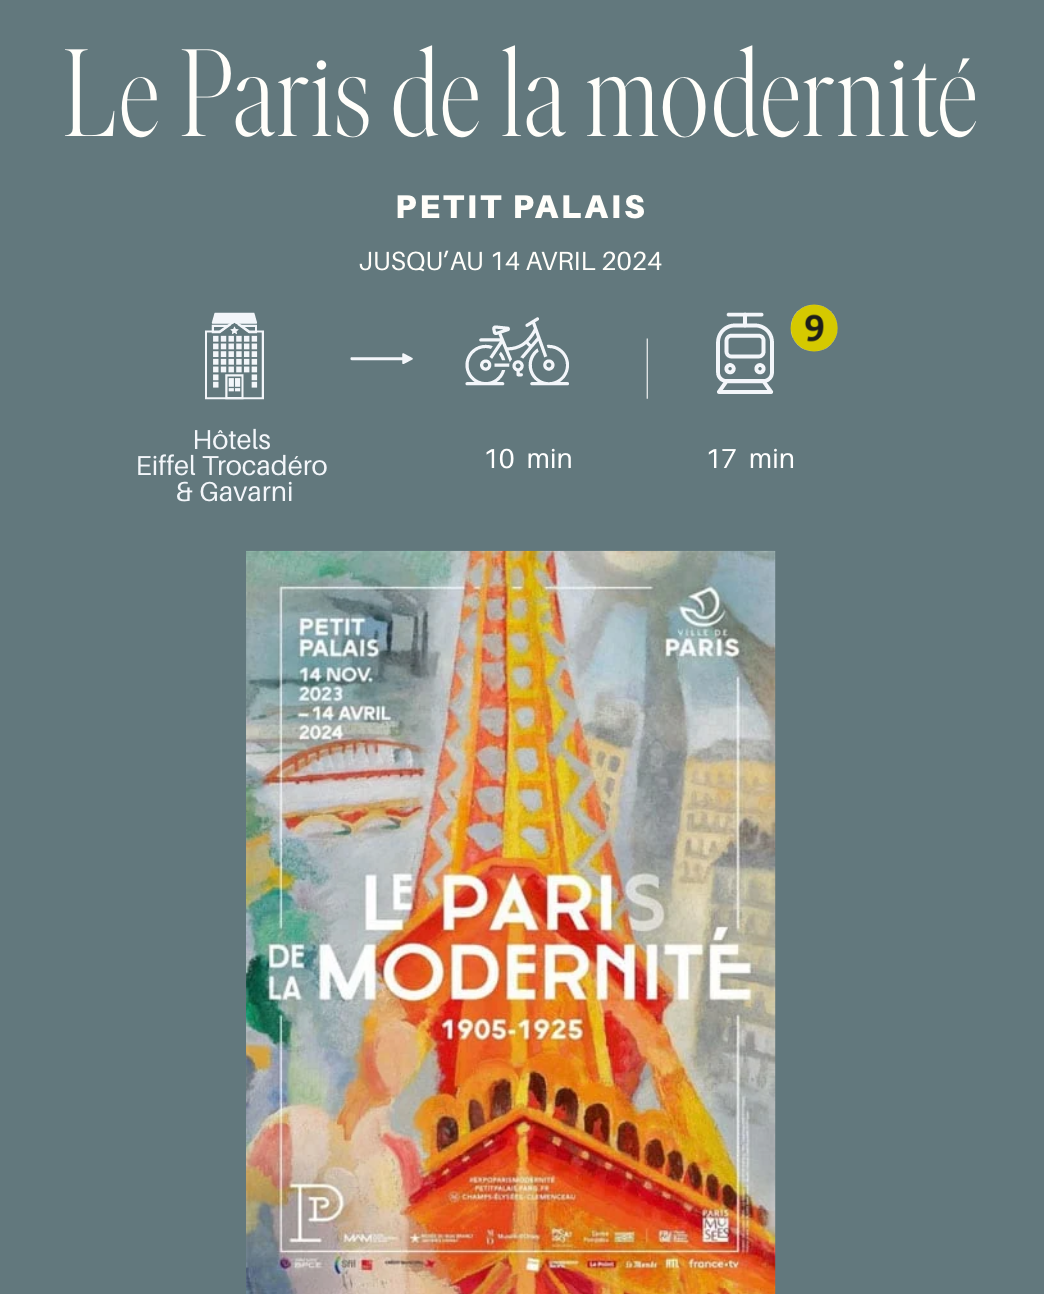 The Paris of modernity